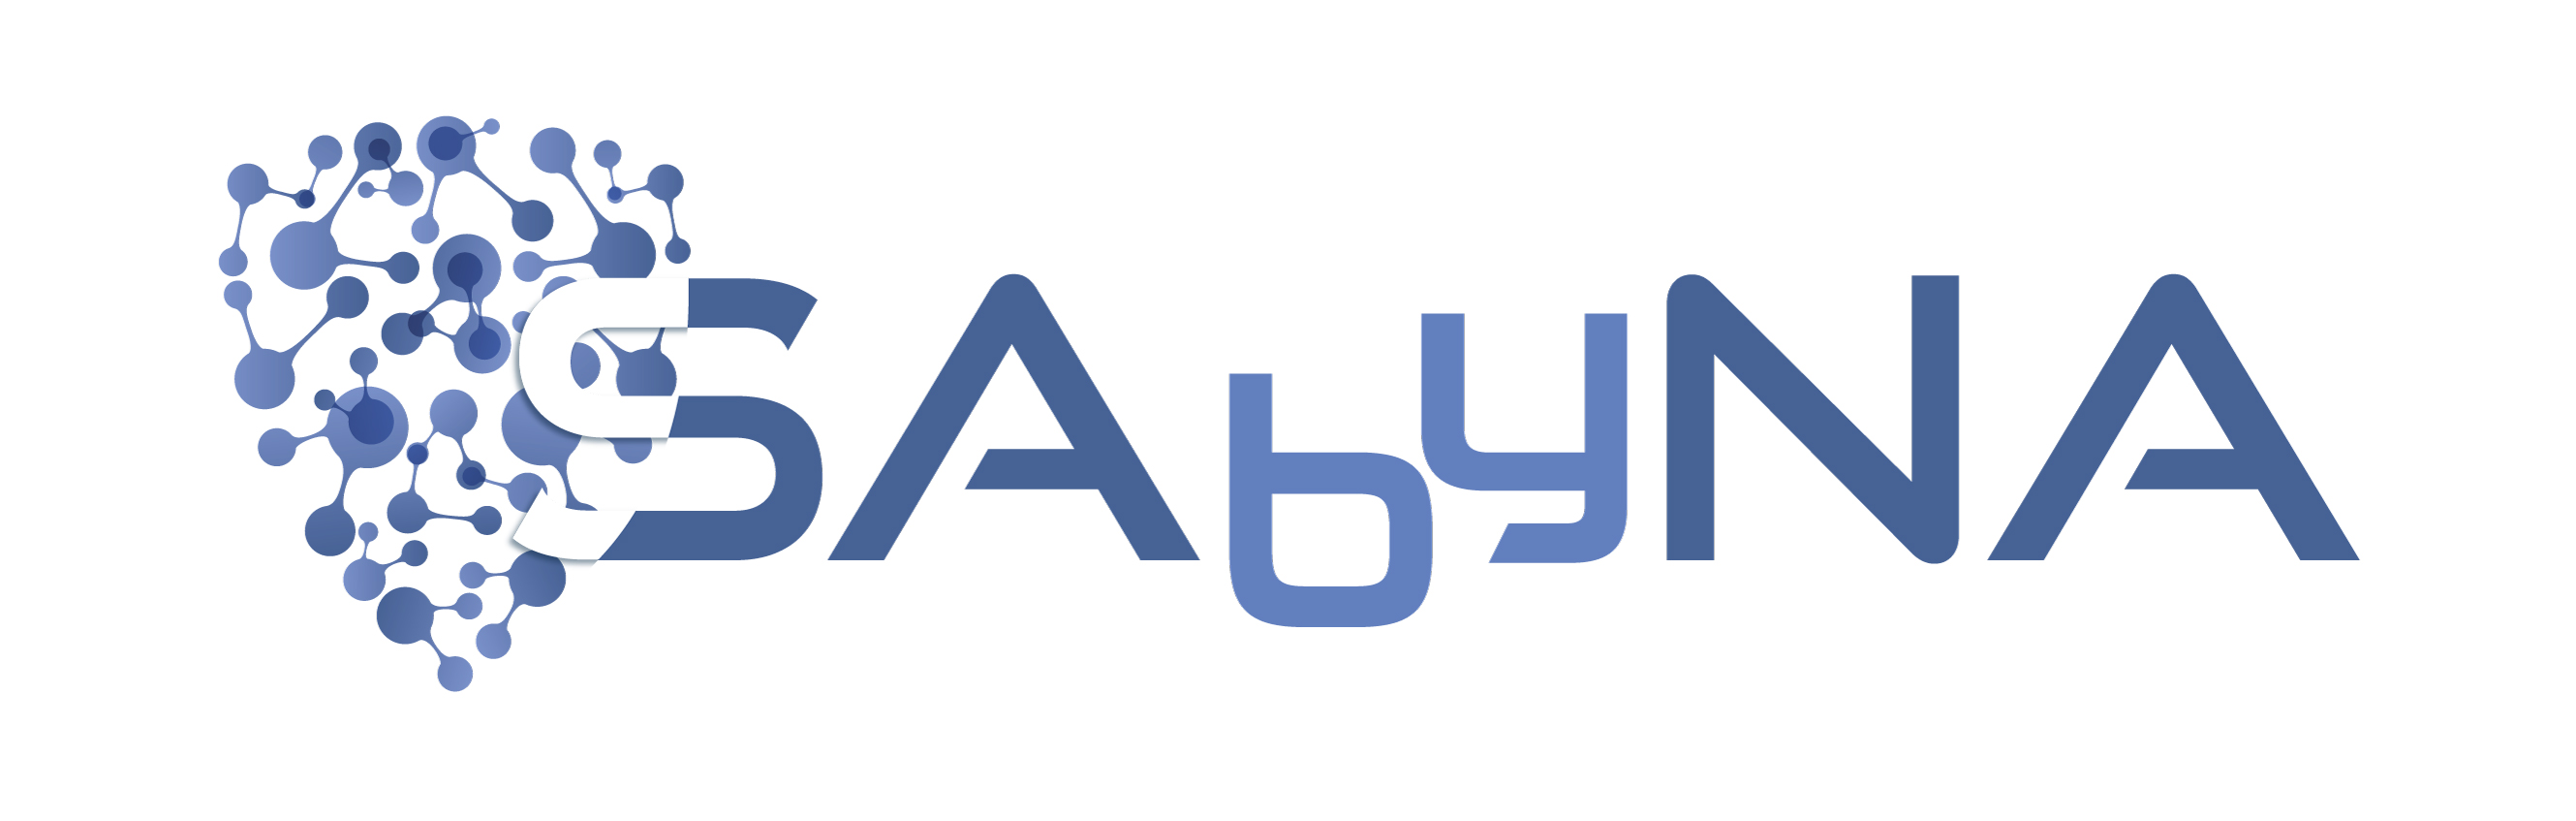 Logo Sabyna